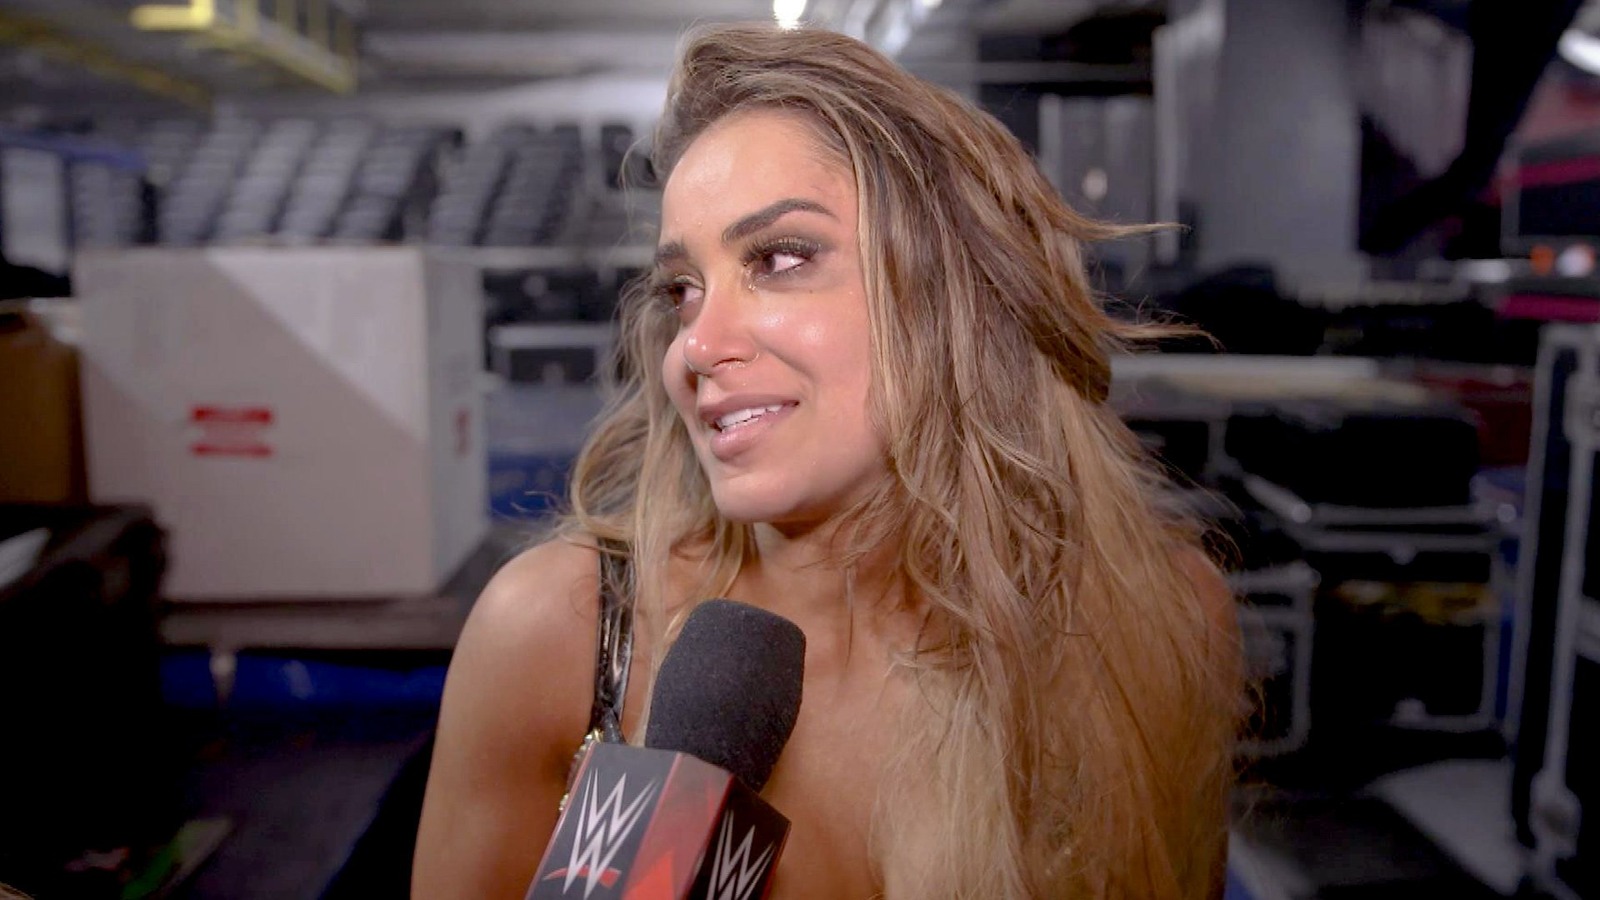 Aliyah Announces Her WWE Departure